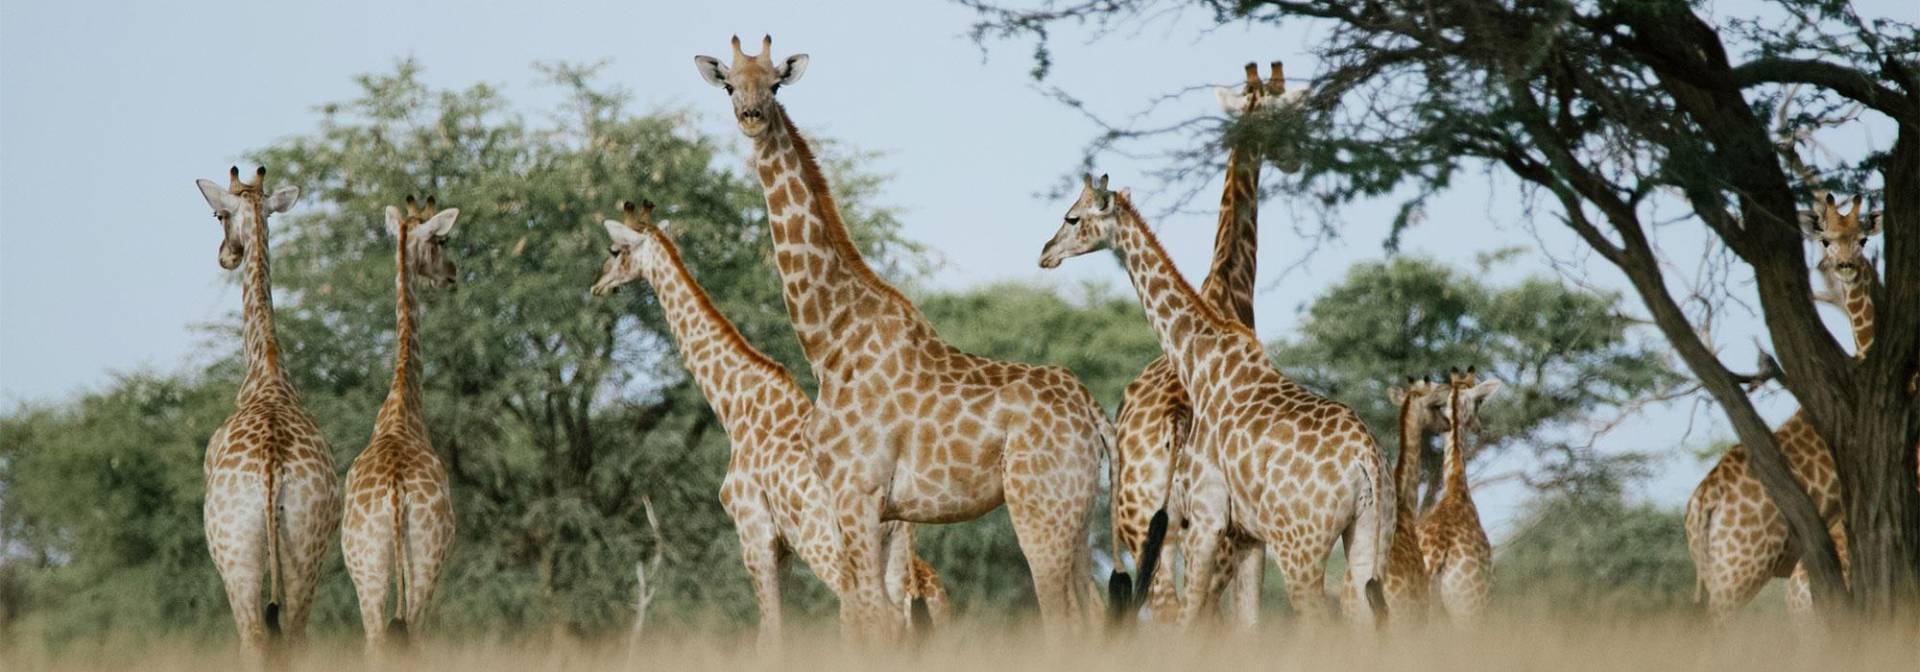 Giraffen Naturschutzprojekt in Namibia